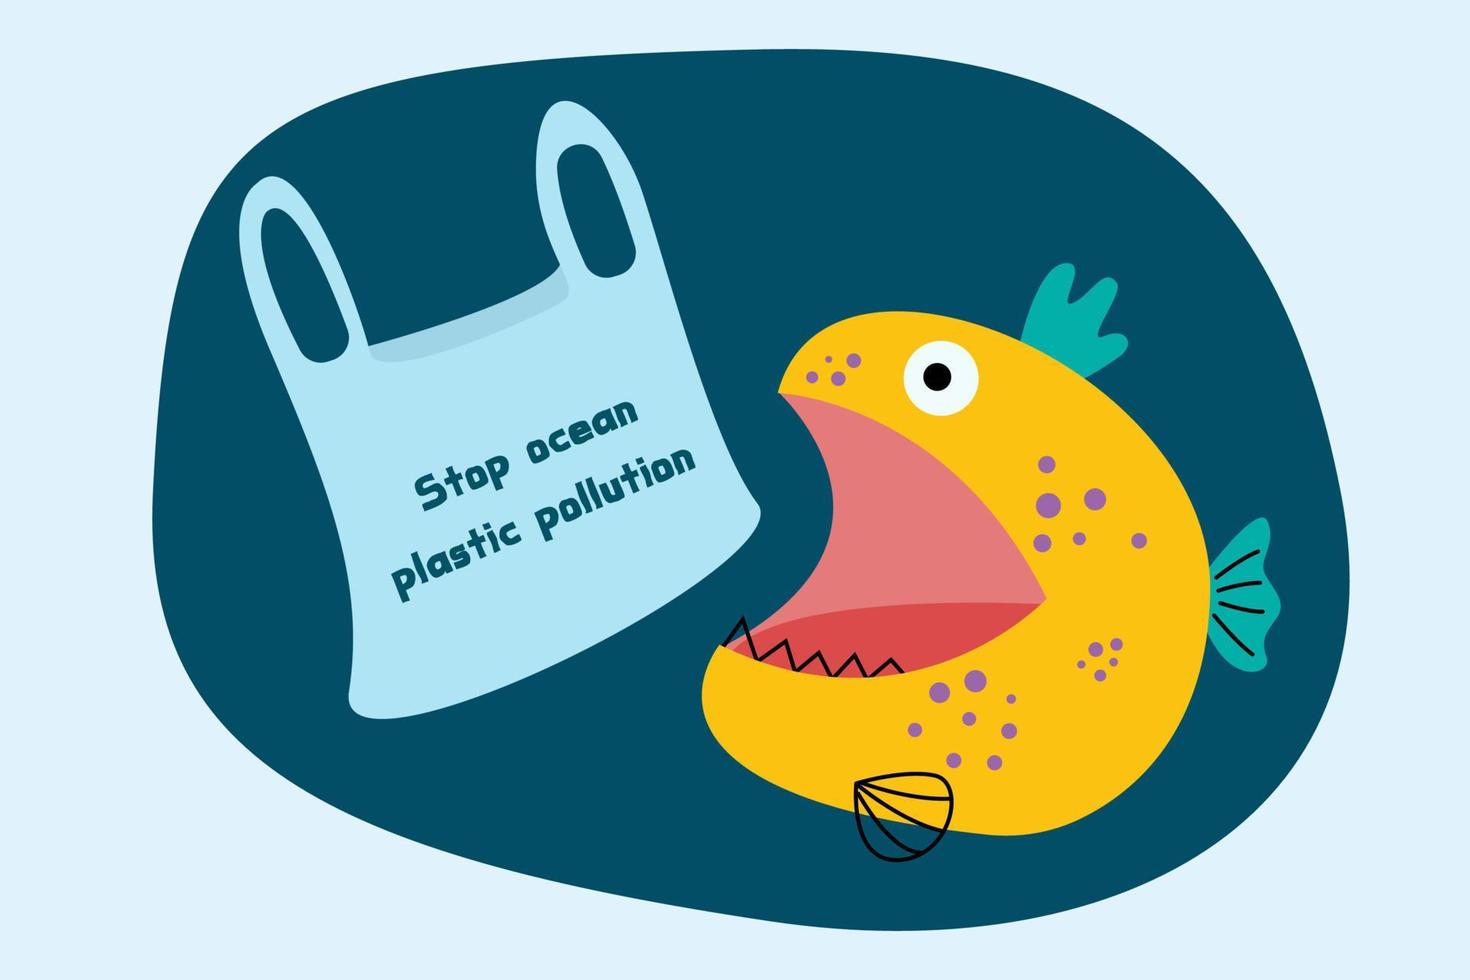 stop ocean plastic pollution concept. vector